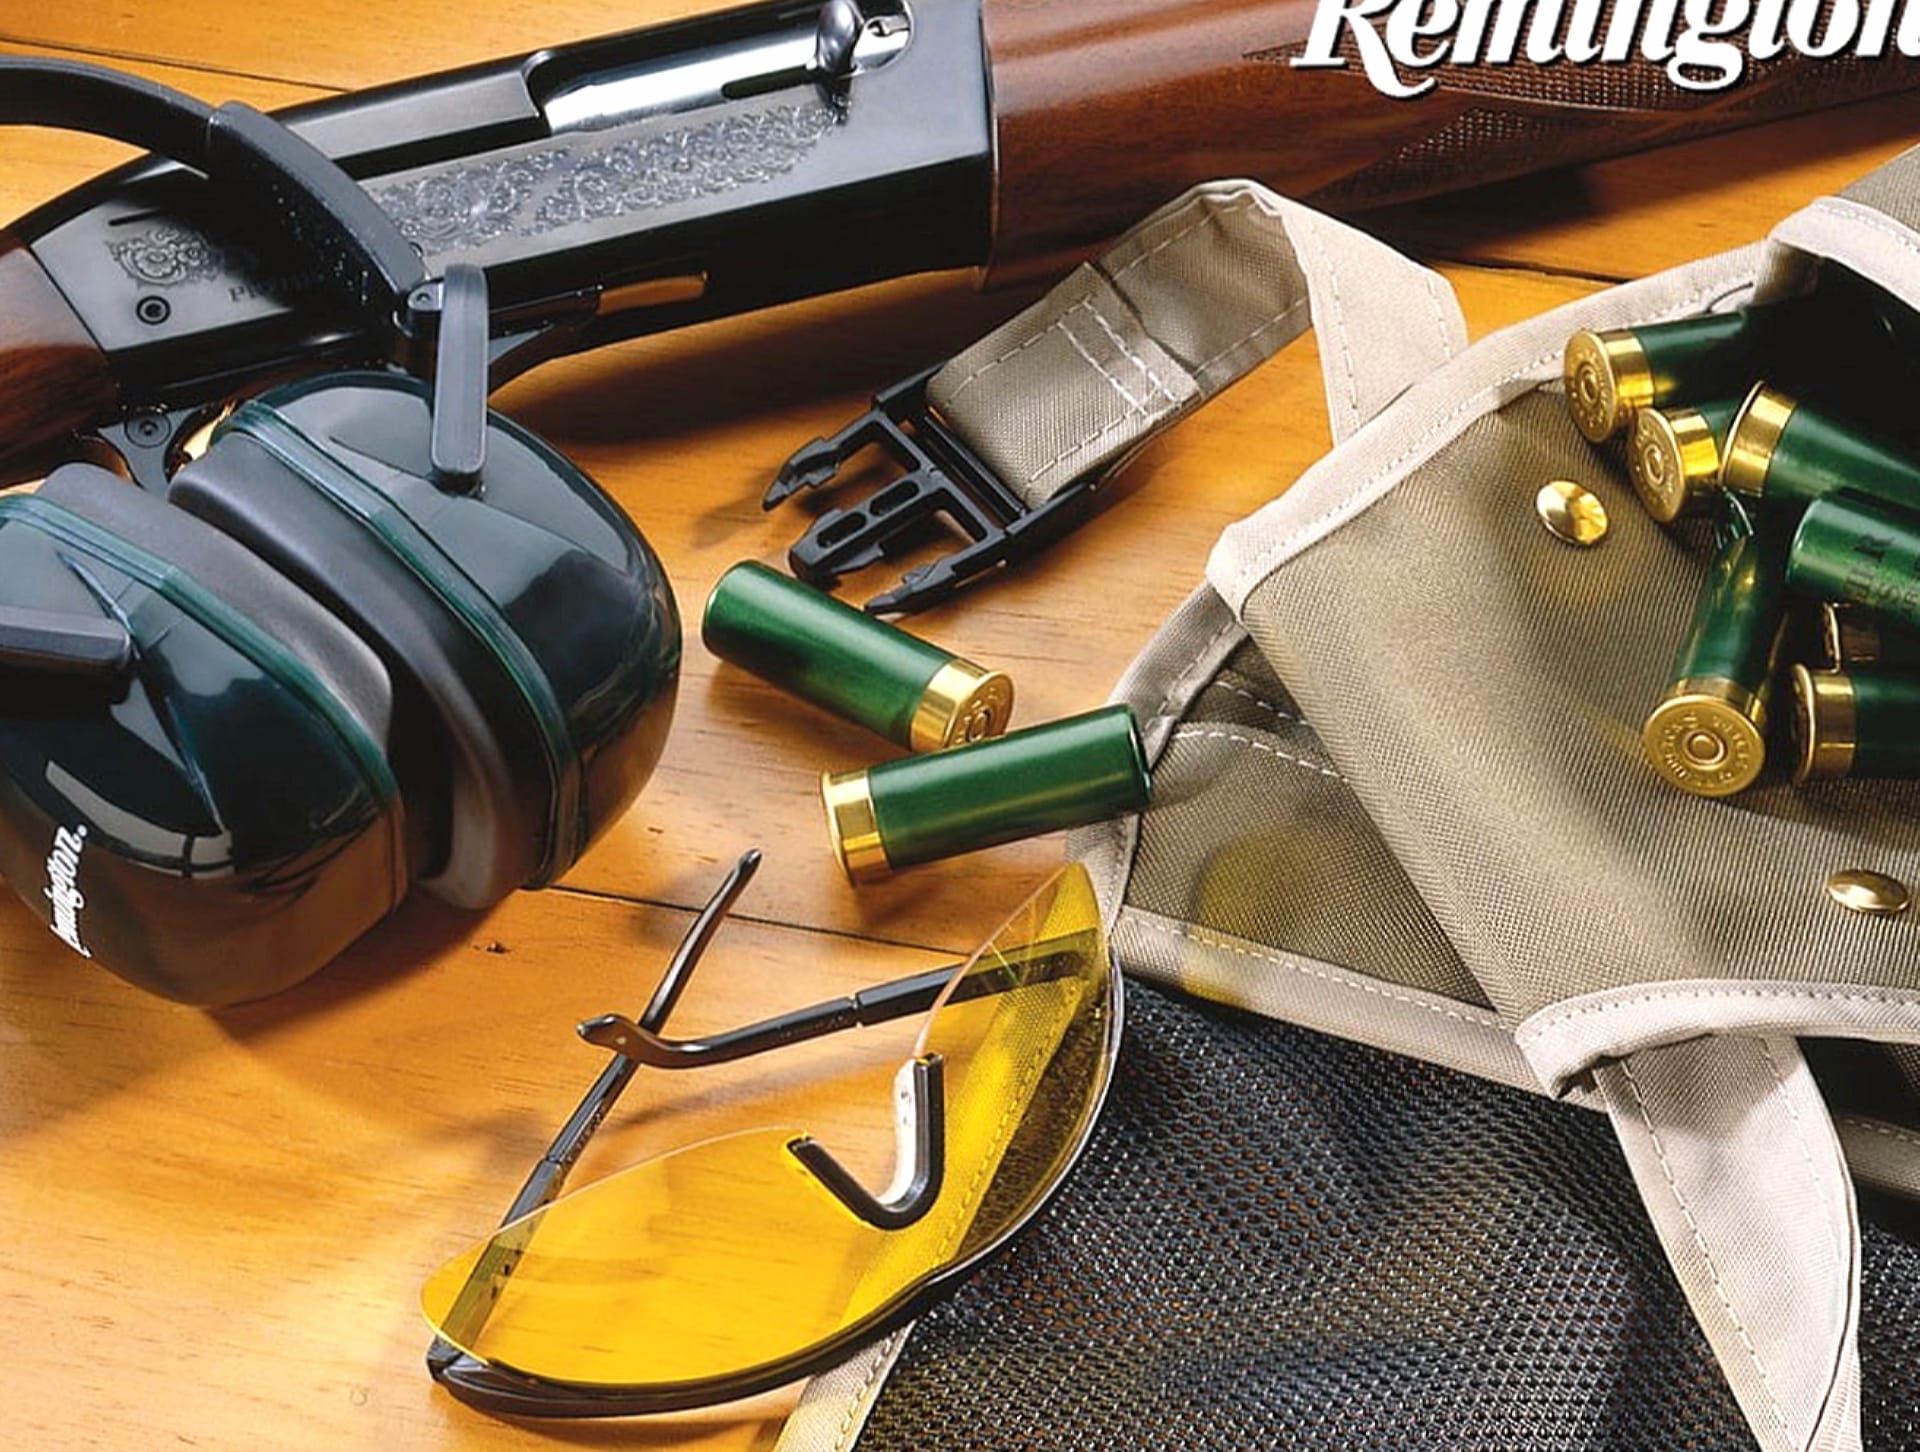 Remington Shotgun at 1024 x 768 size wallpapers HD quality